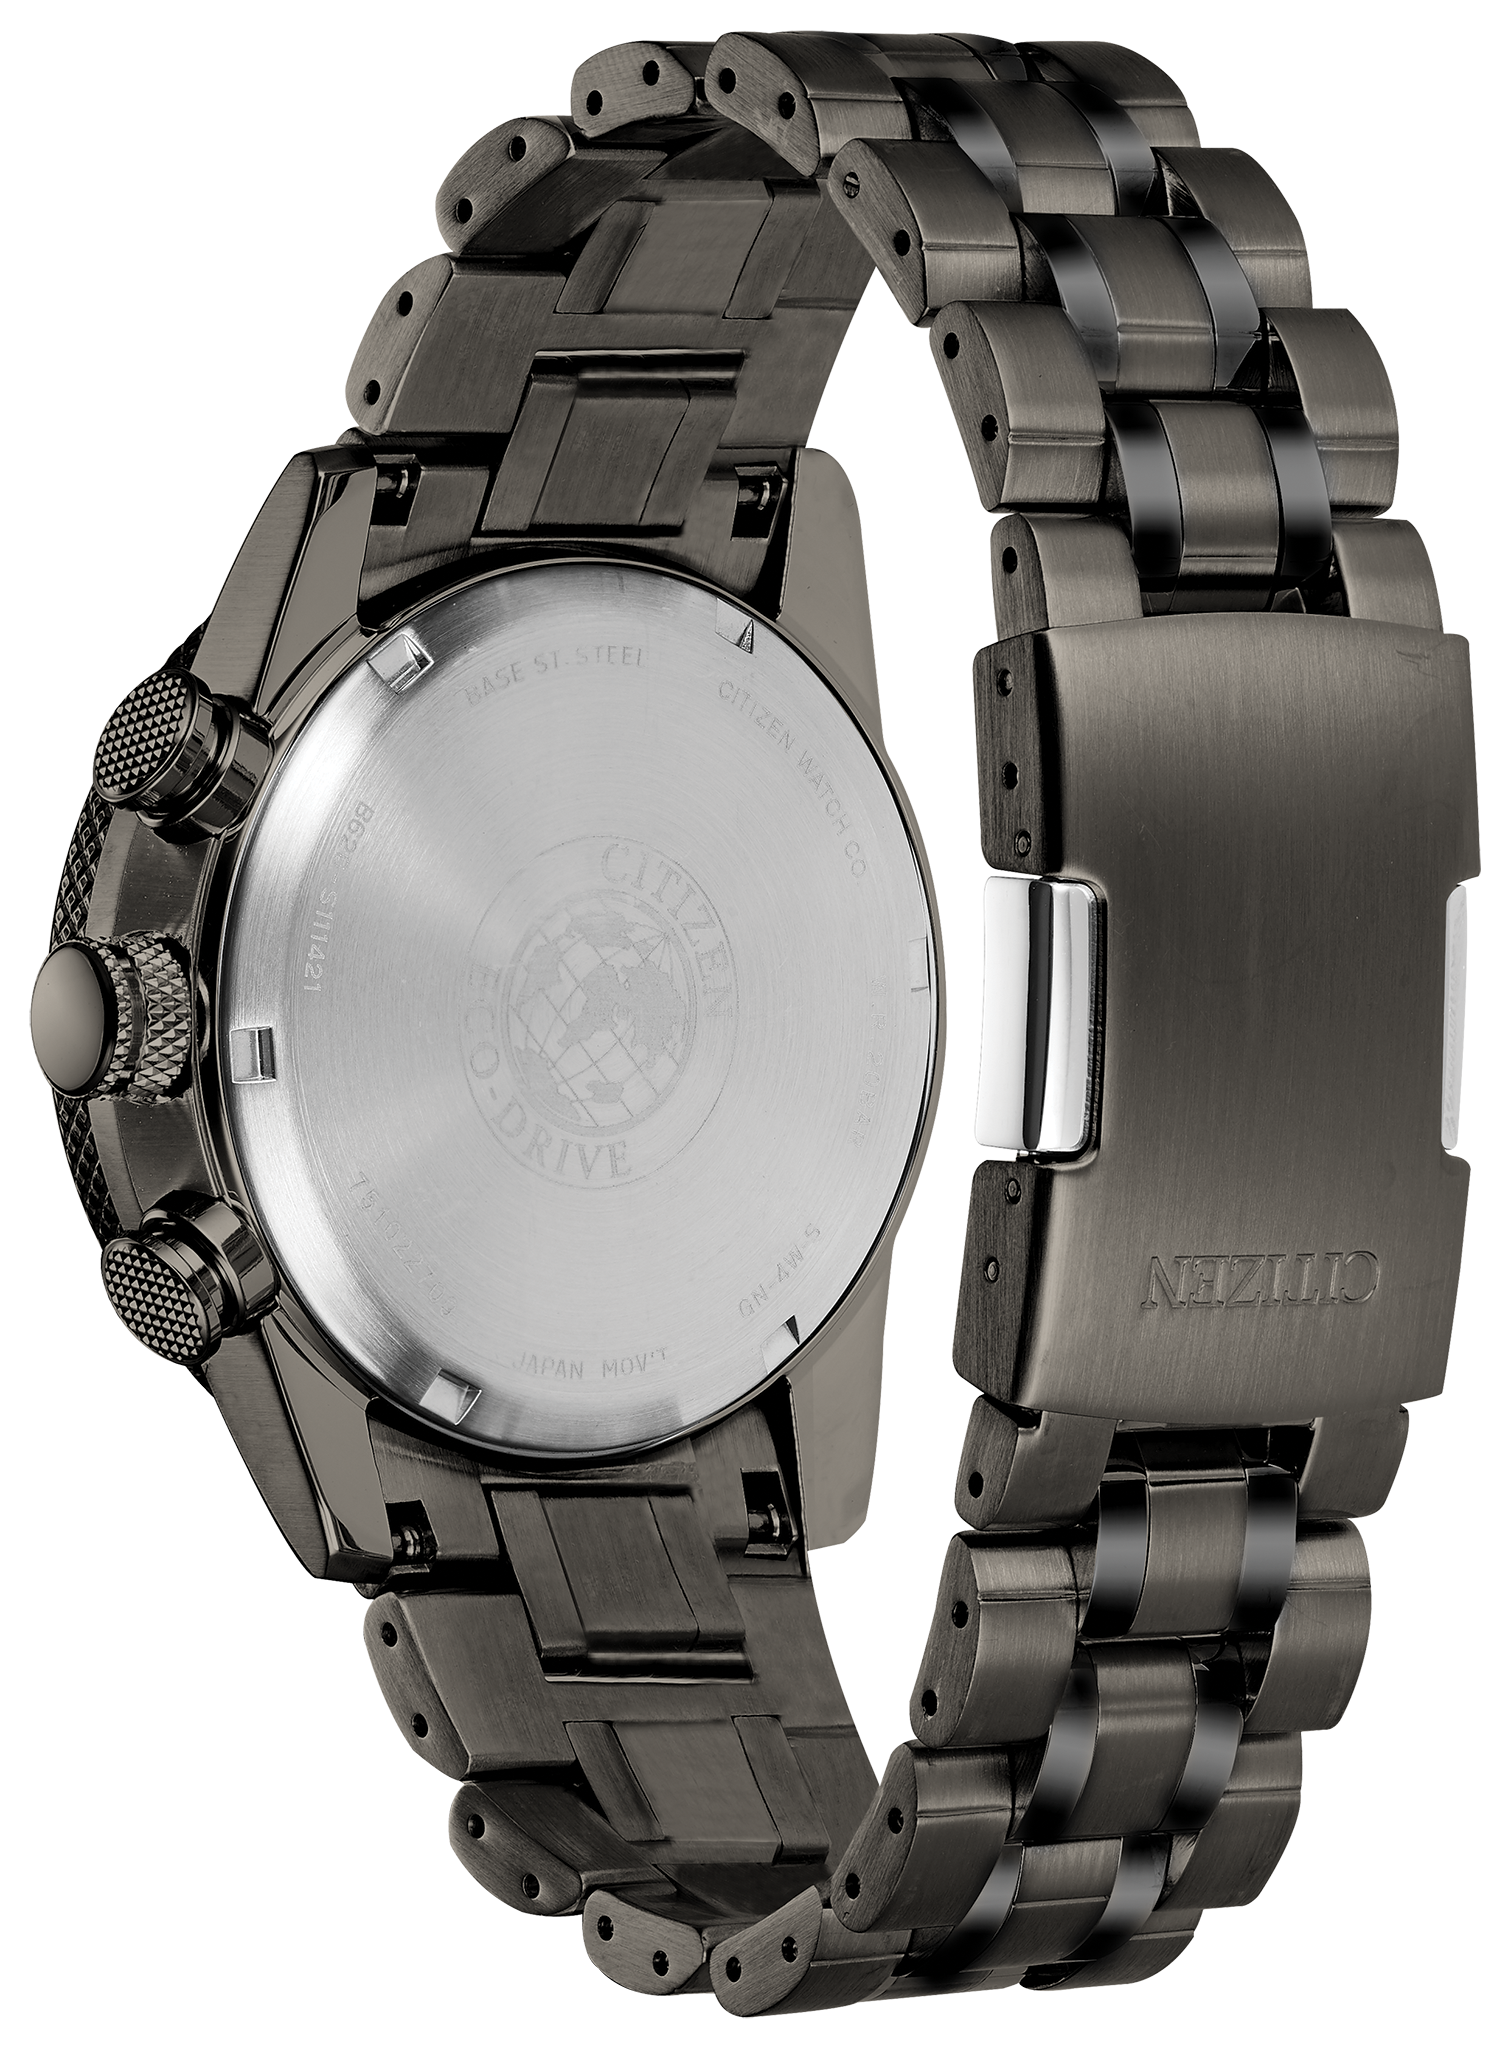 Citizen NightHawk Eco-Drive Black Stainless Steel Wrist Watch | Avenue Shop  Swap & Sell